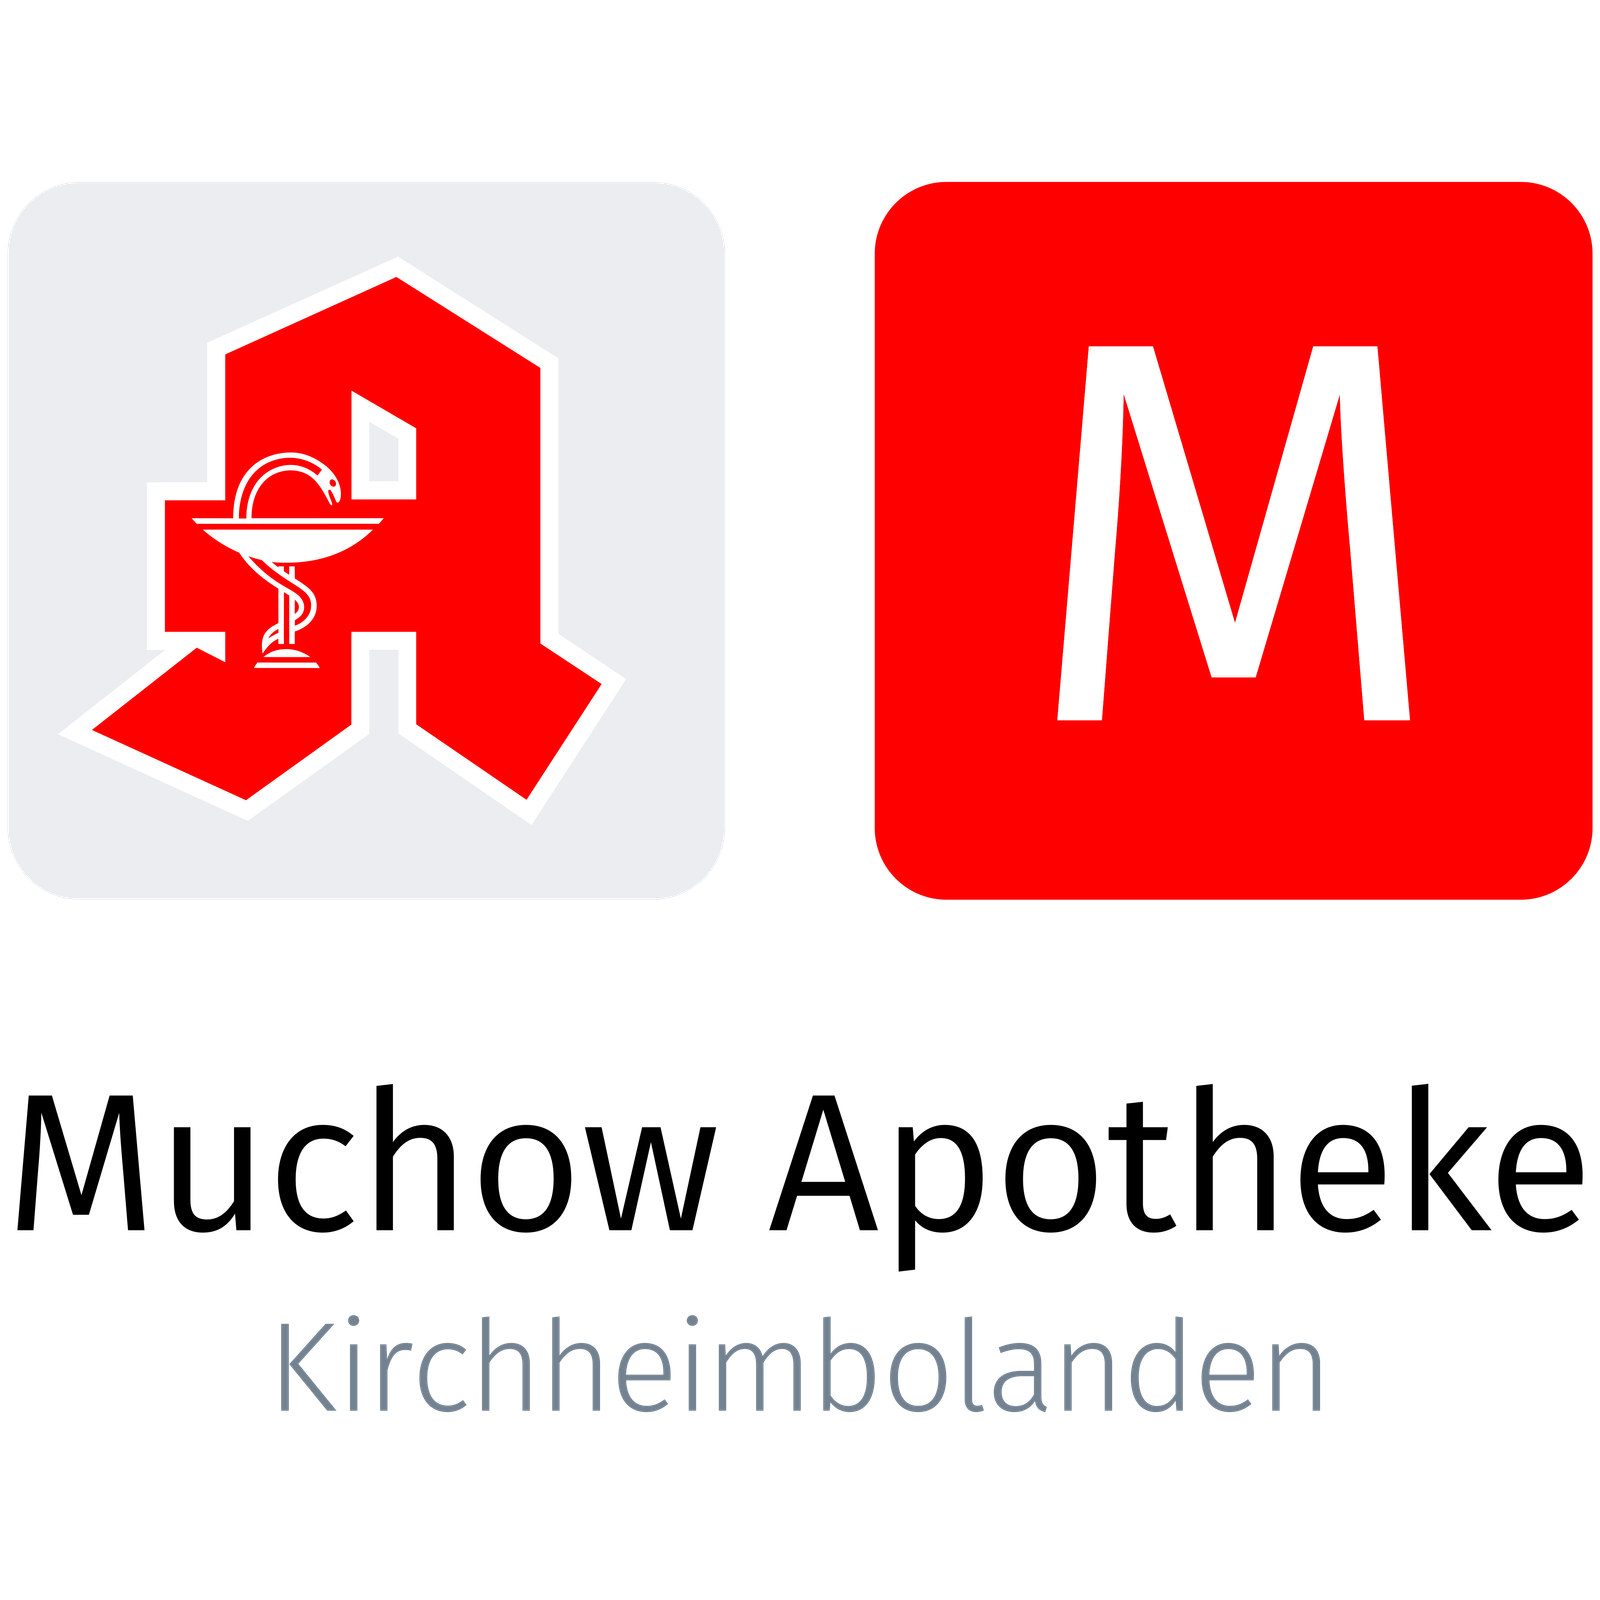 Muchow Apotheke Kirchheimbolanden Logo